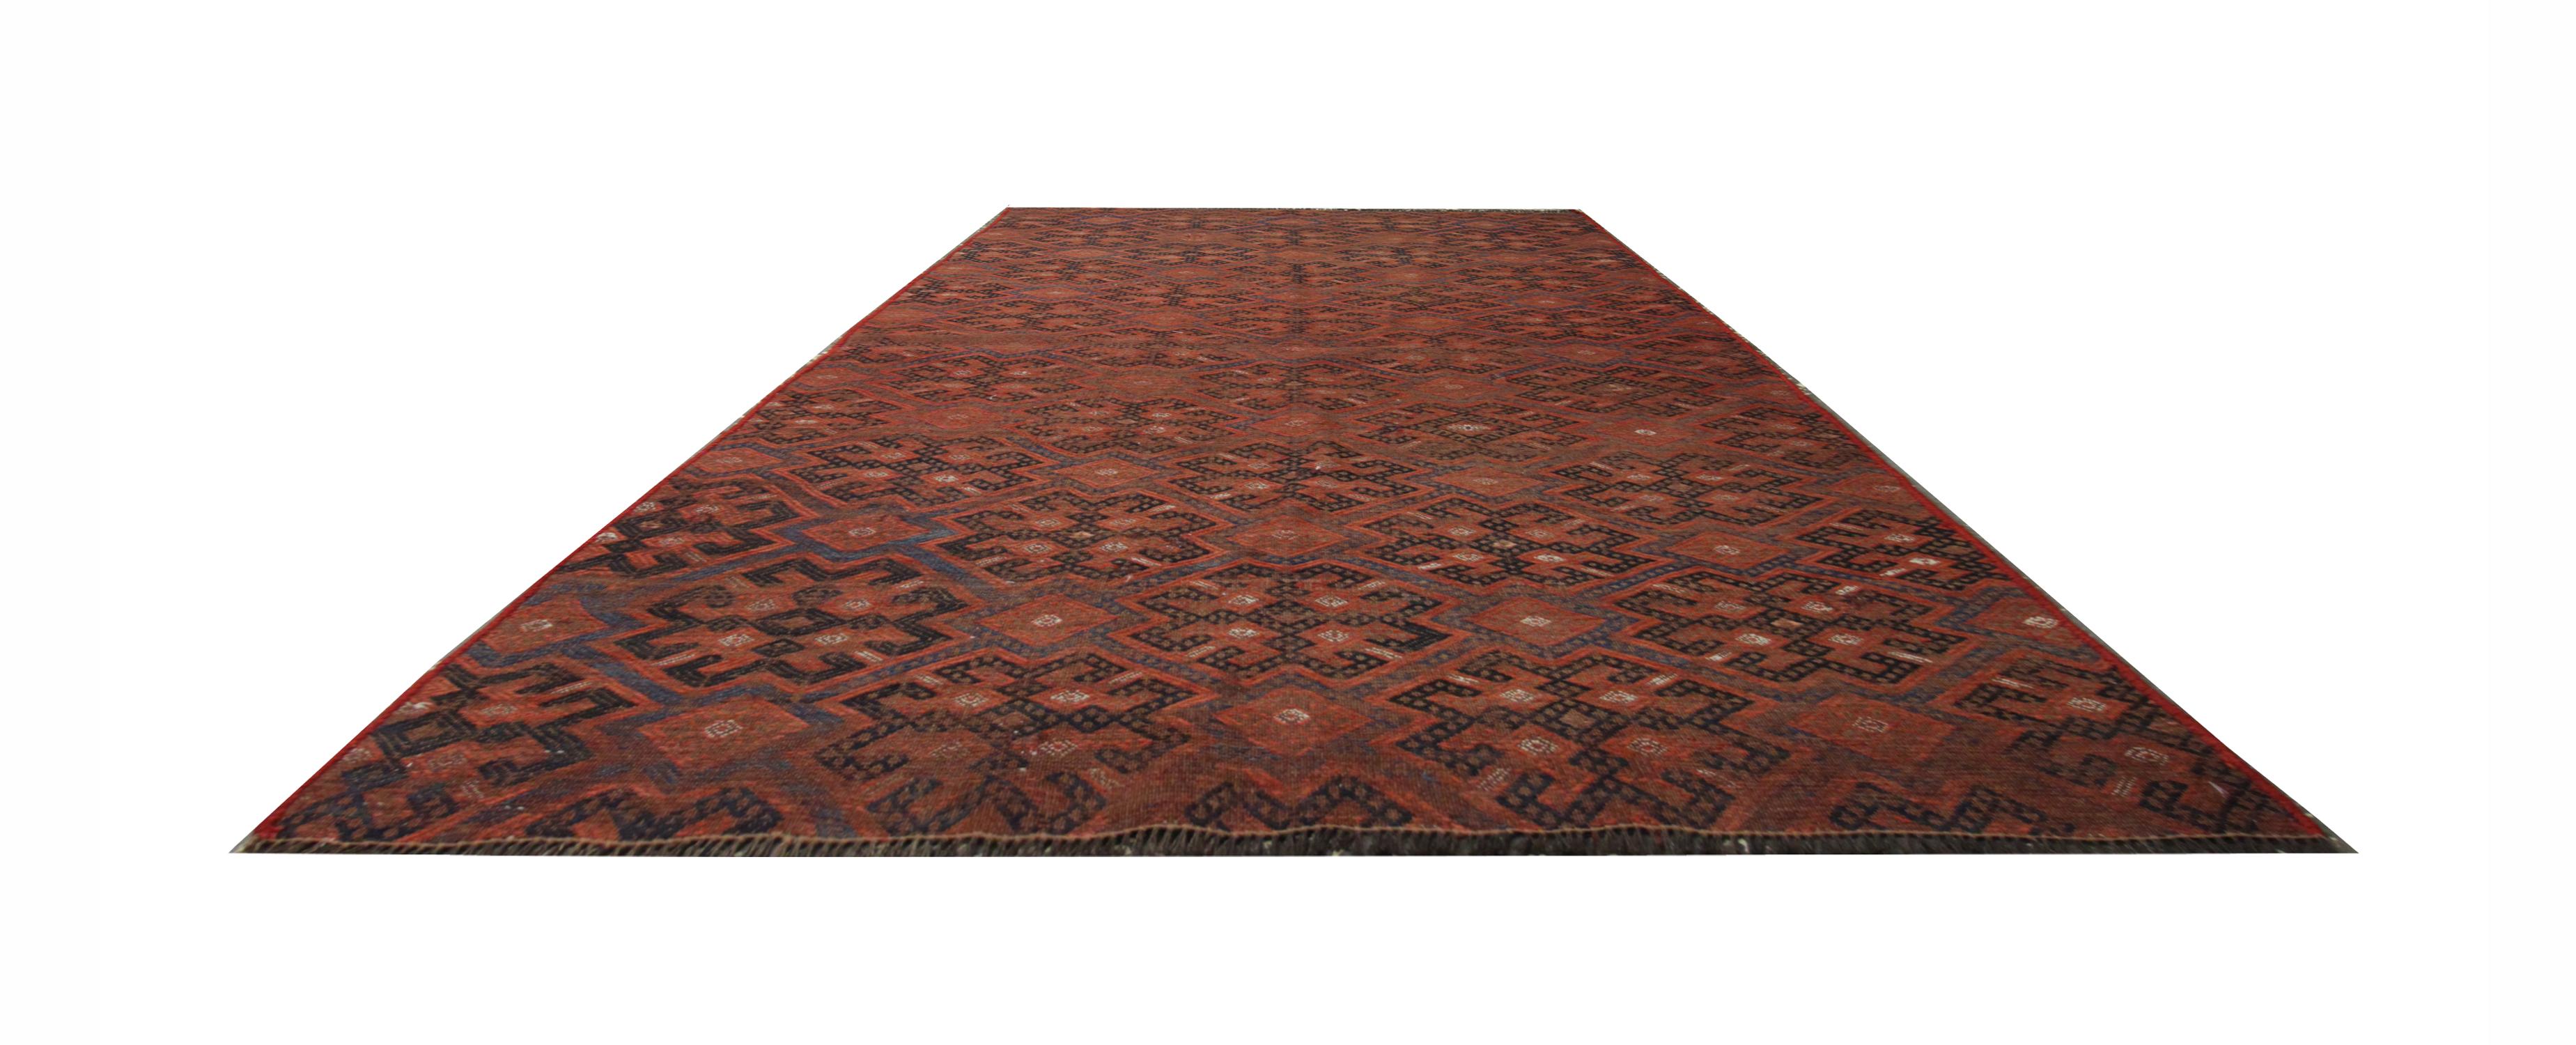 Tribal Antique Rugs Kilims Handmade Carpet Caucasian Kilim Area Rug For Sale